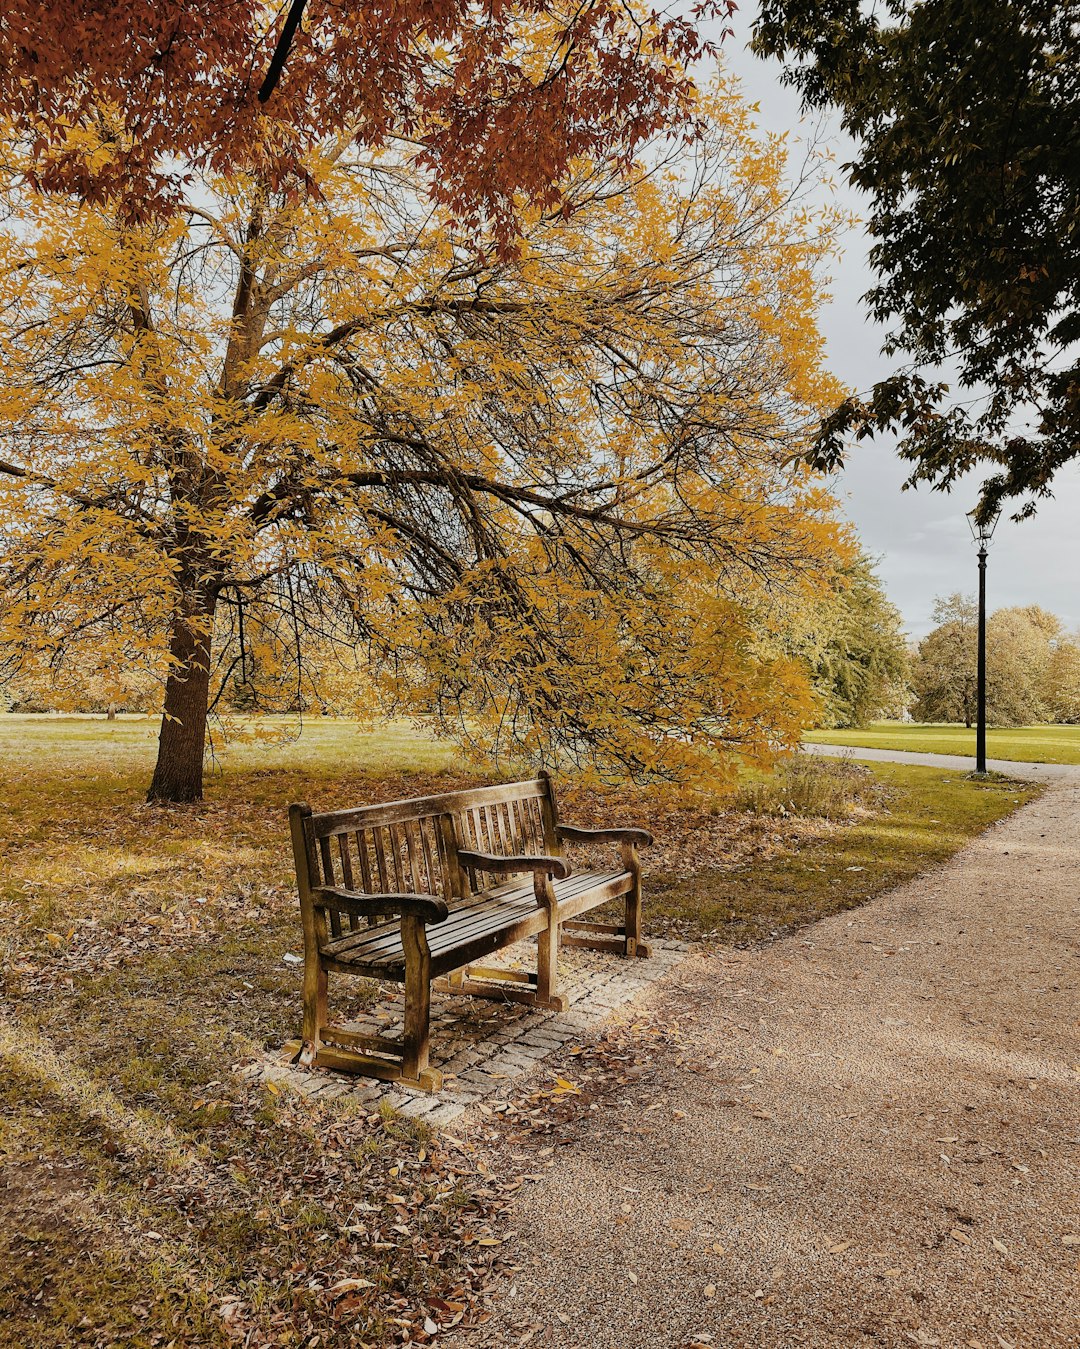 brown wooden bench under brown leafed tree